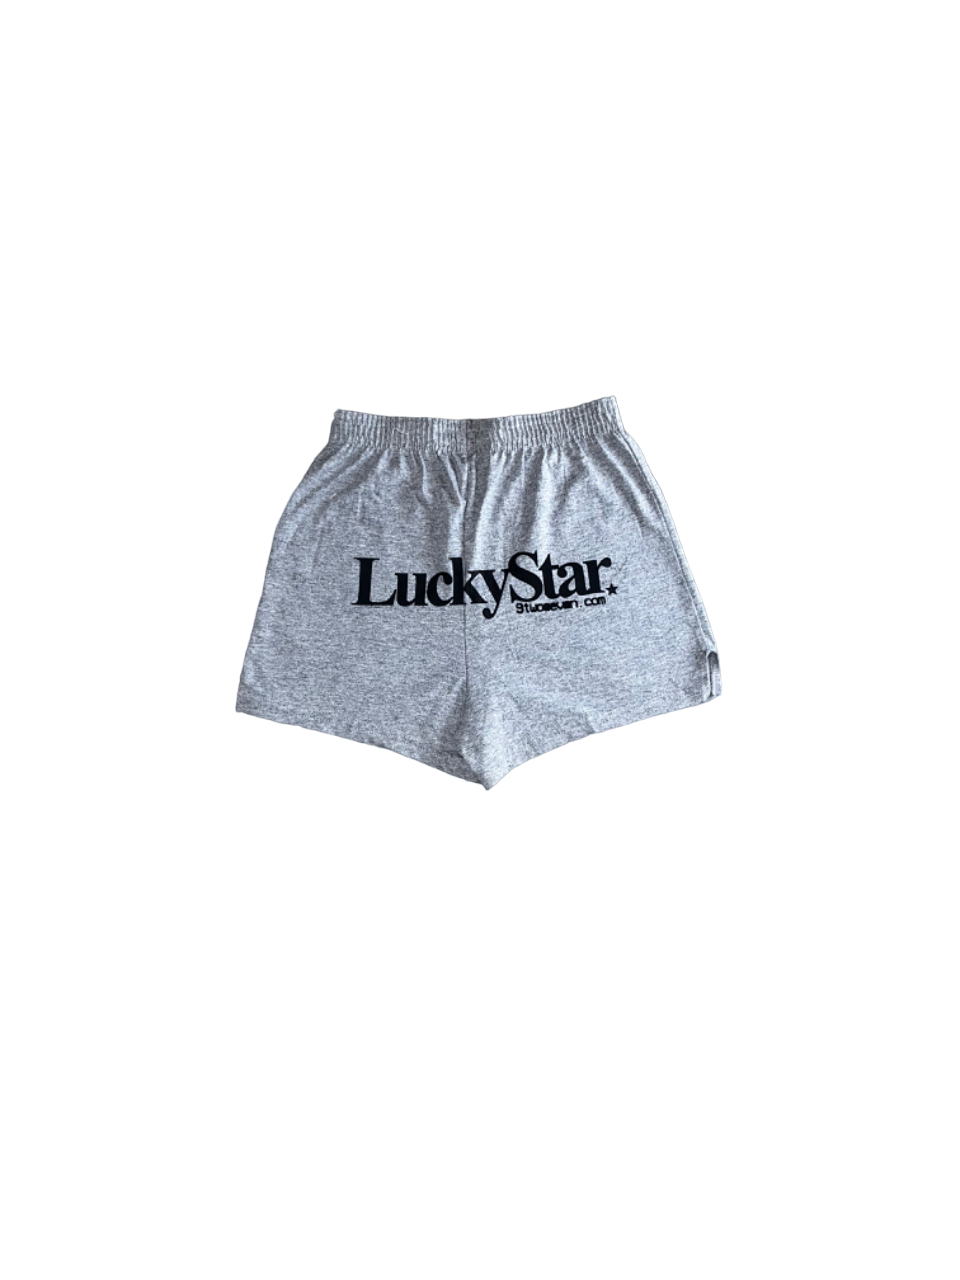 LuckyStar Shorts